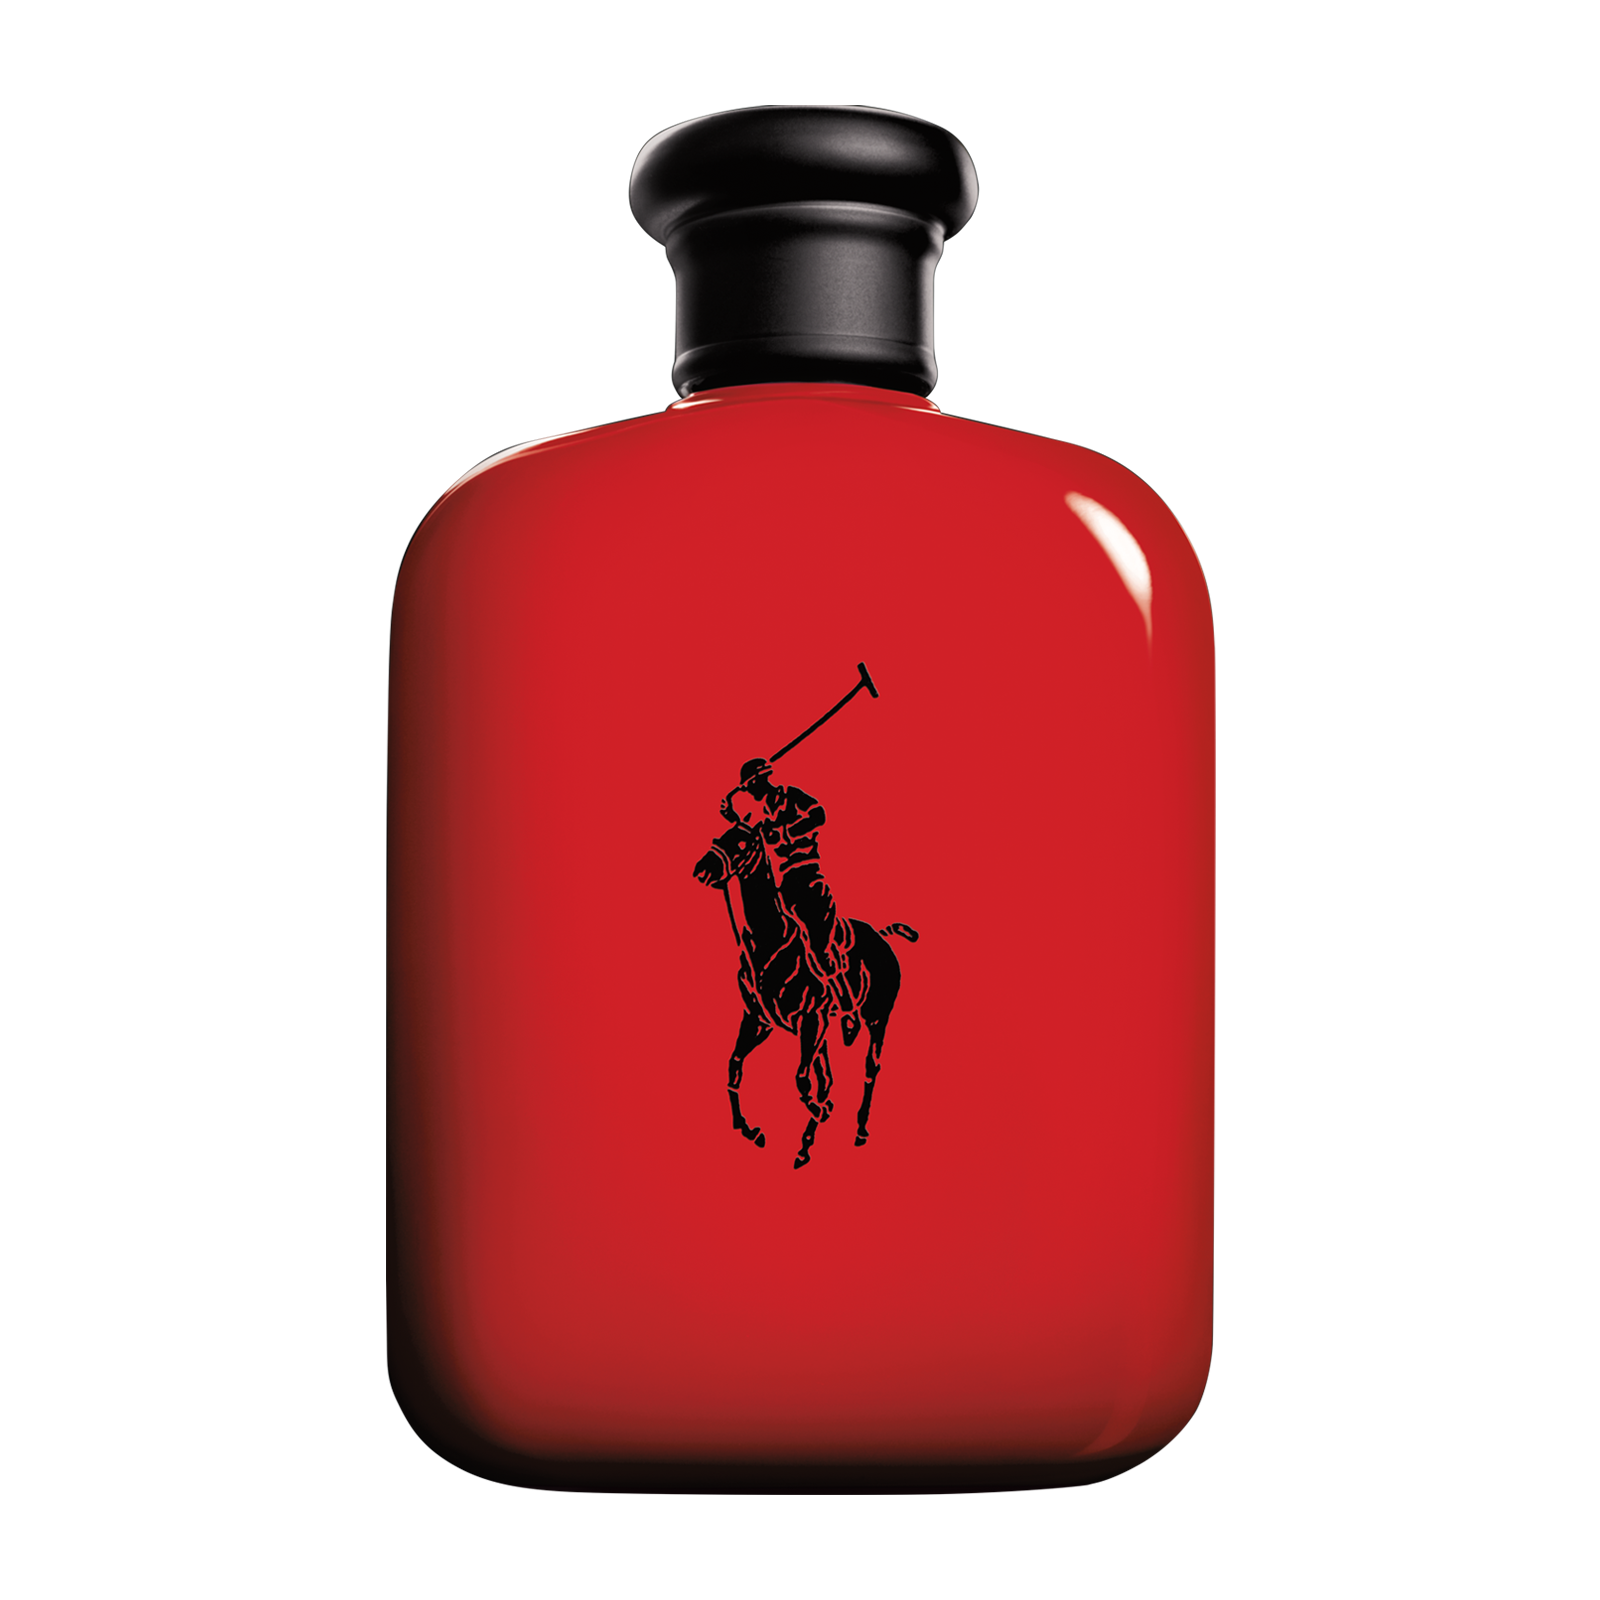 red bottle perfume